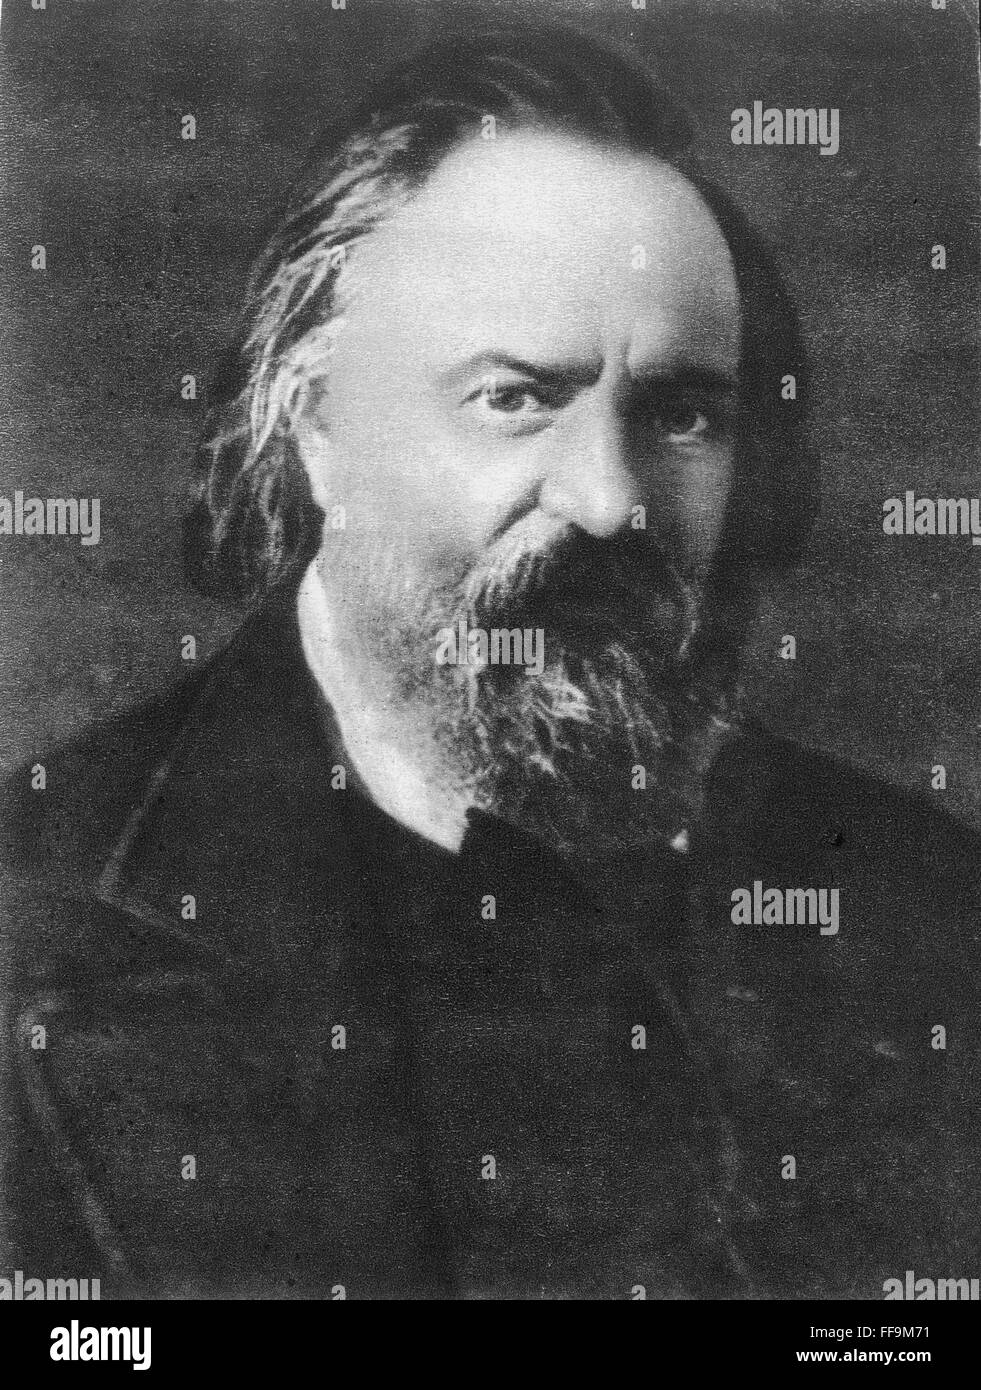 ALEKSANDR IVANOVICH HERZEN /n(1812-1870). Russian writer and political agitator. Oil on canvas by Nicholas Gay, 1867. Stock Photo